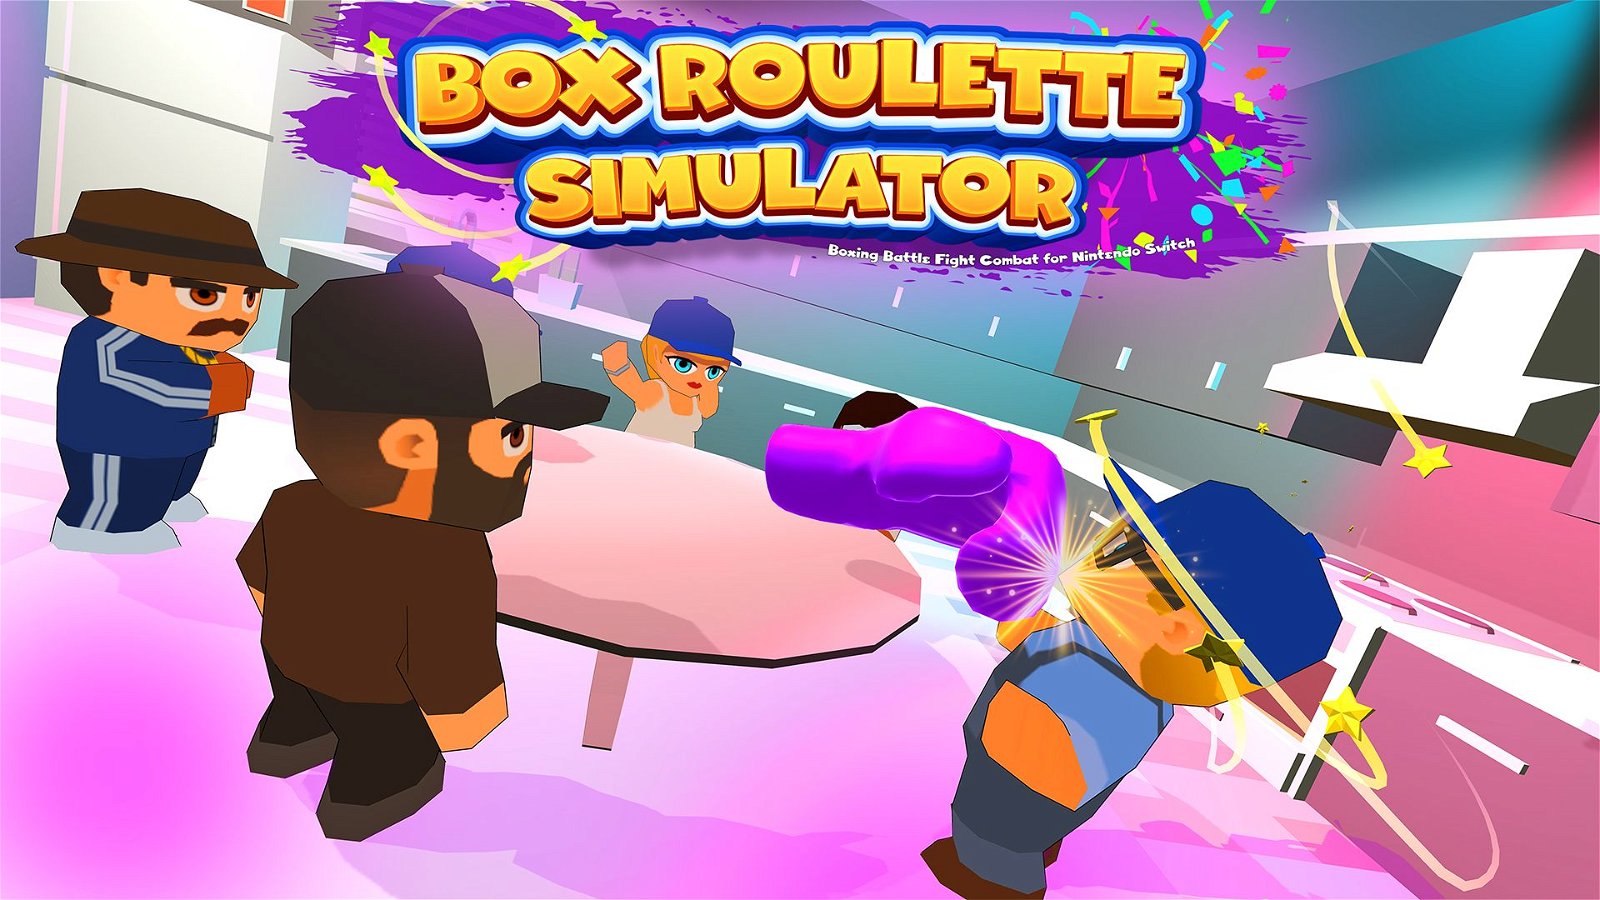 Image of Box Roulette Simulator- Boxing Battle Fight Combat